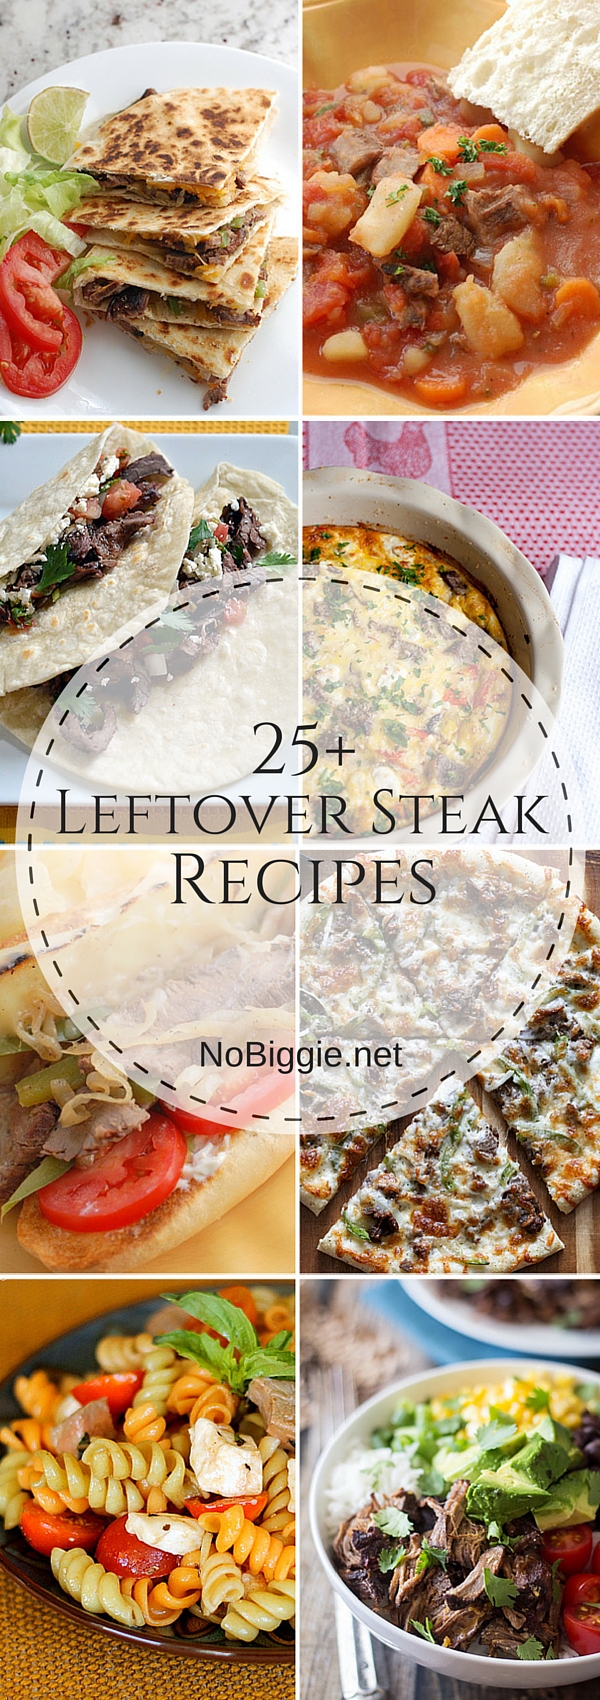 25+ Leftover Steak Recipes | NoBiggie.net